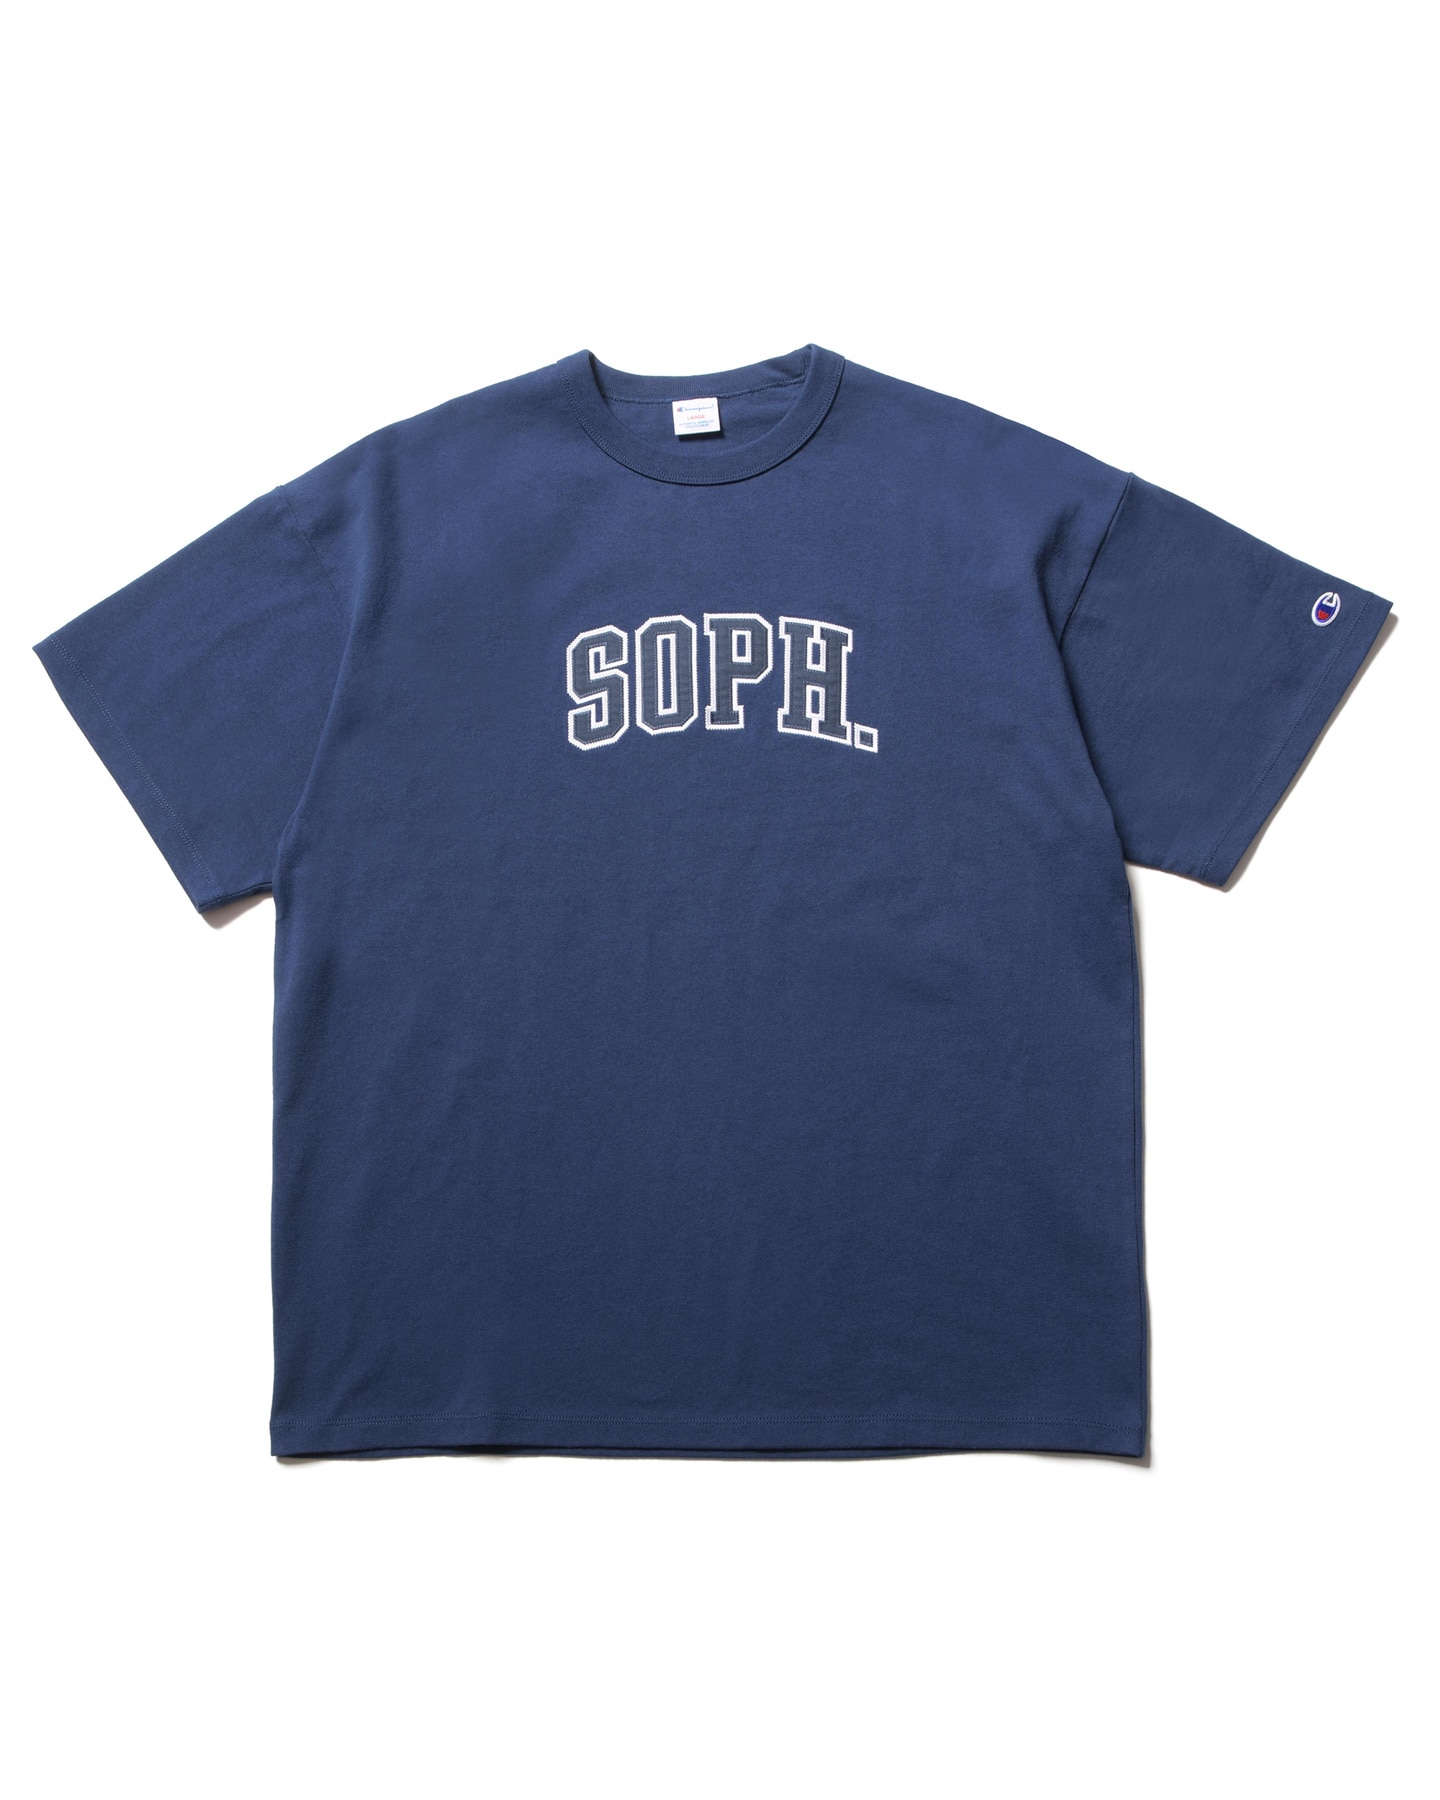 SOPH Champion CREWNECK TEE Tシャツ 新品SOPH